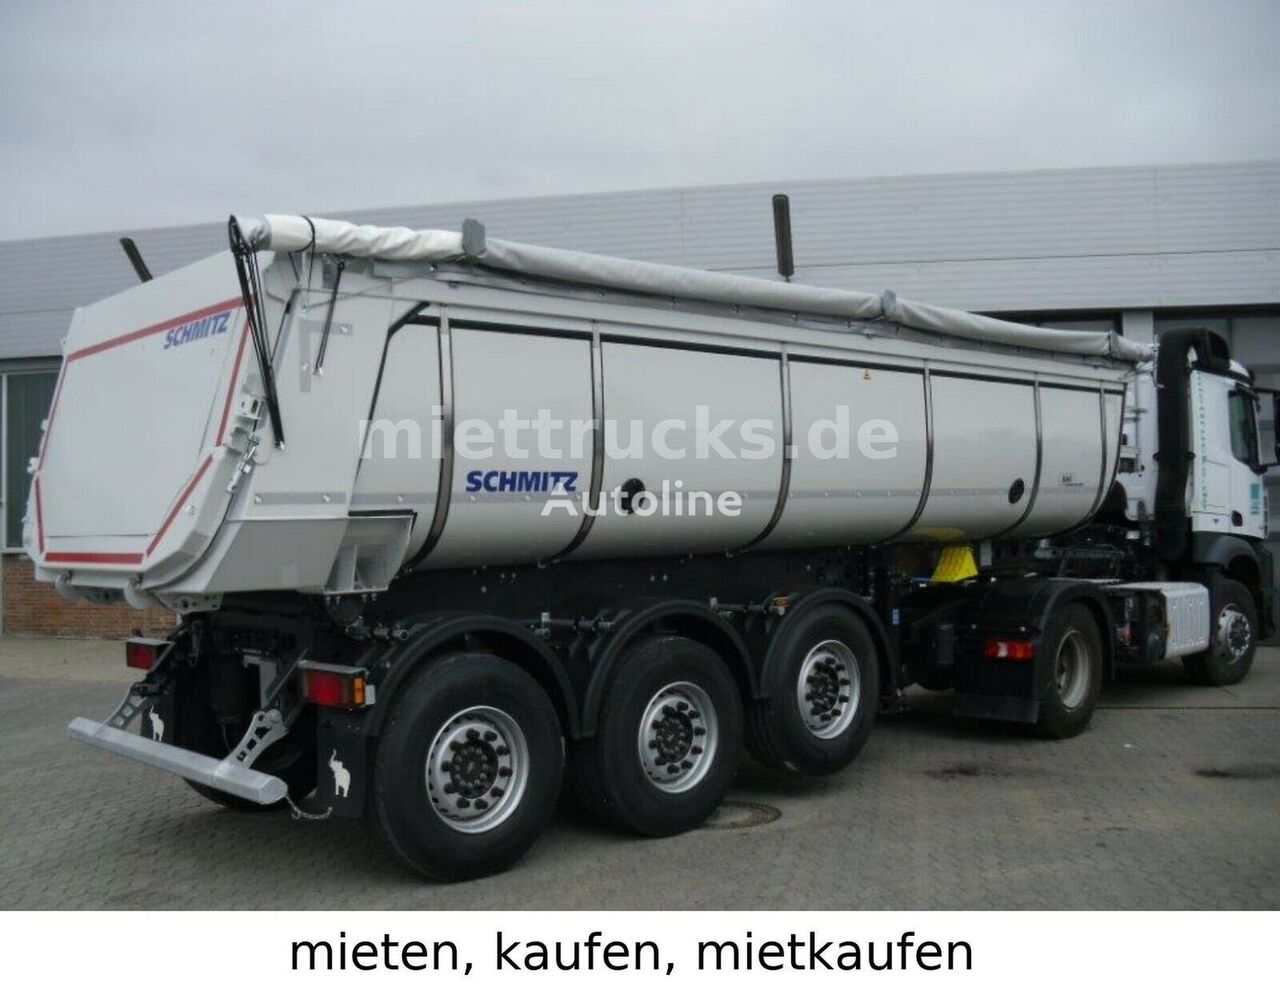 new Schmitz Cargobull Thermo,mieten,kaufen,mietkaufen 689€ tipper semi-trailer